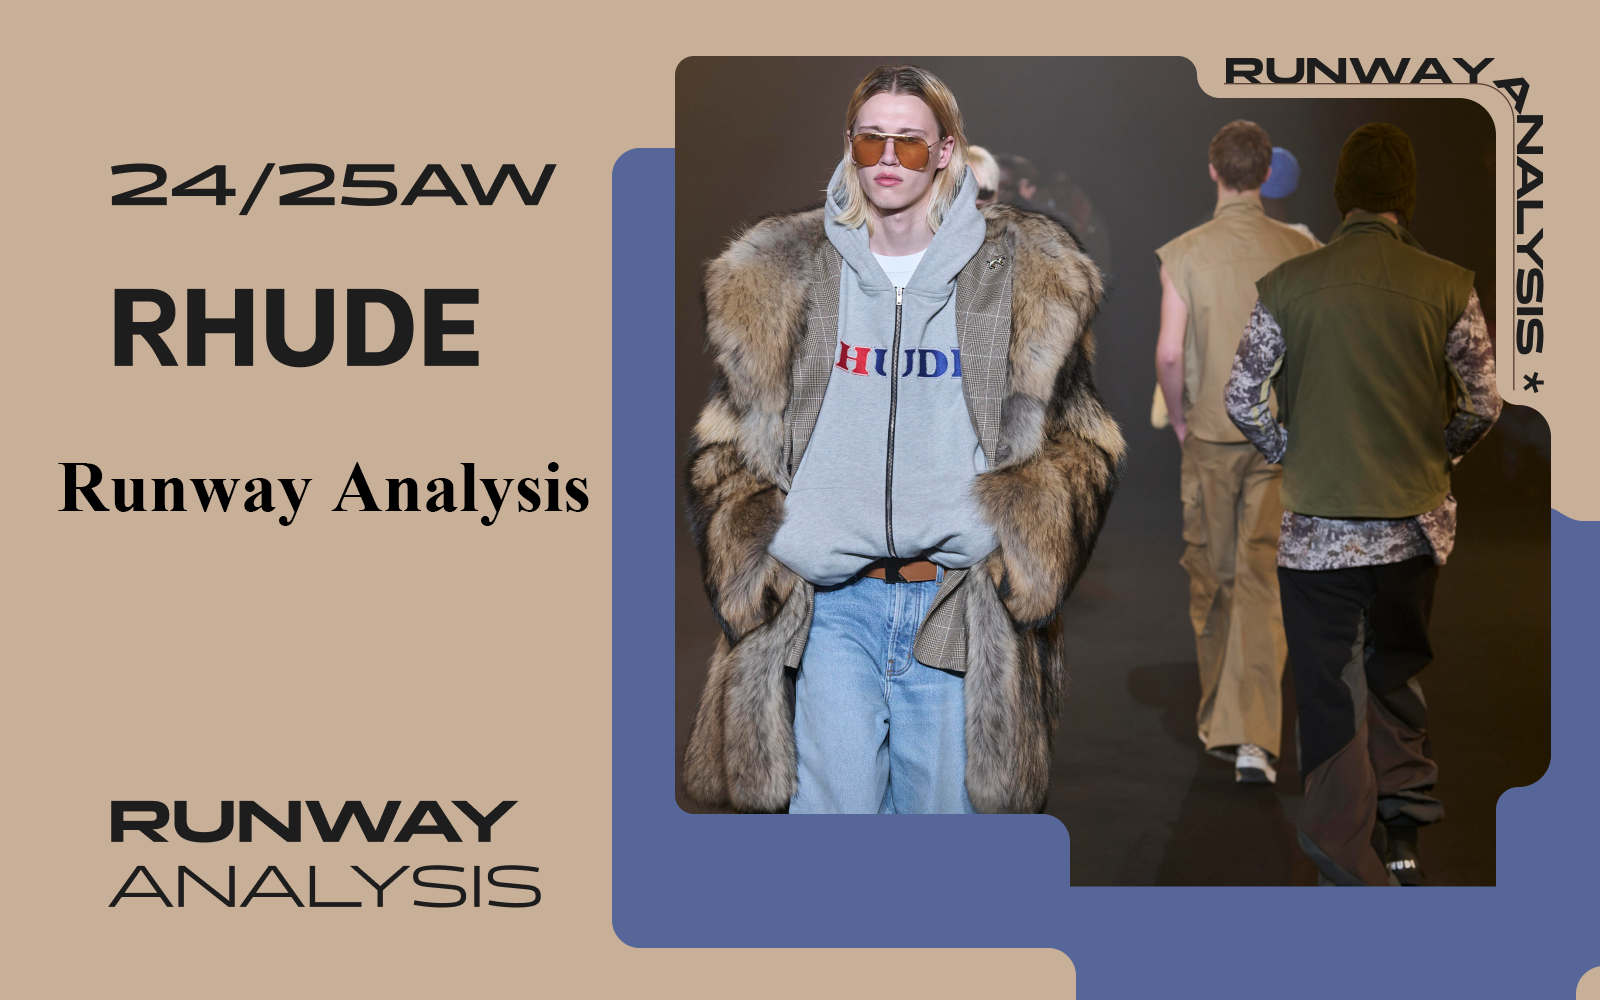 Mix-&-match Innovation -- The Menswear Runway Analysis of RHUDE